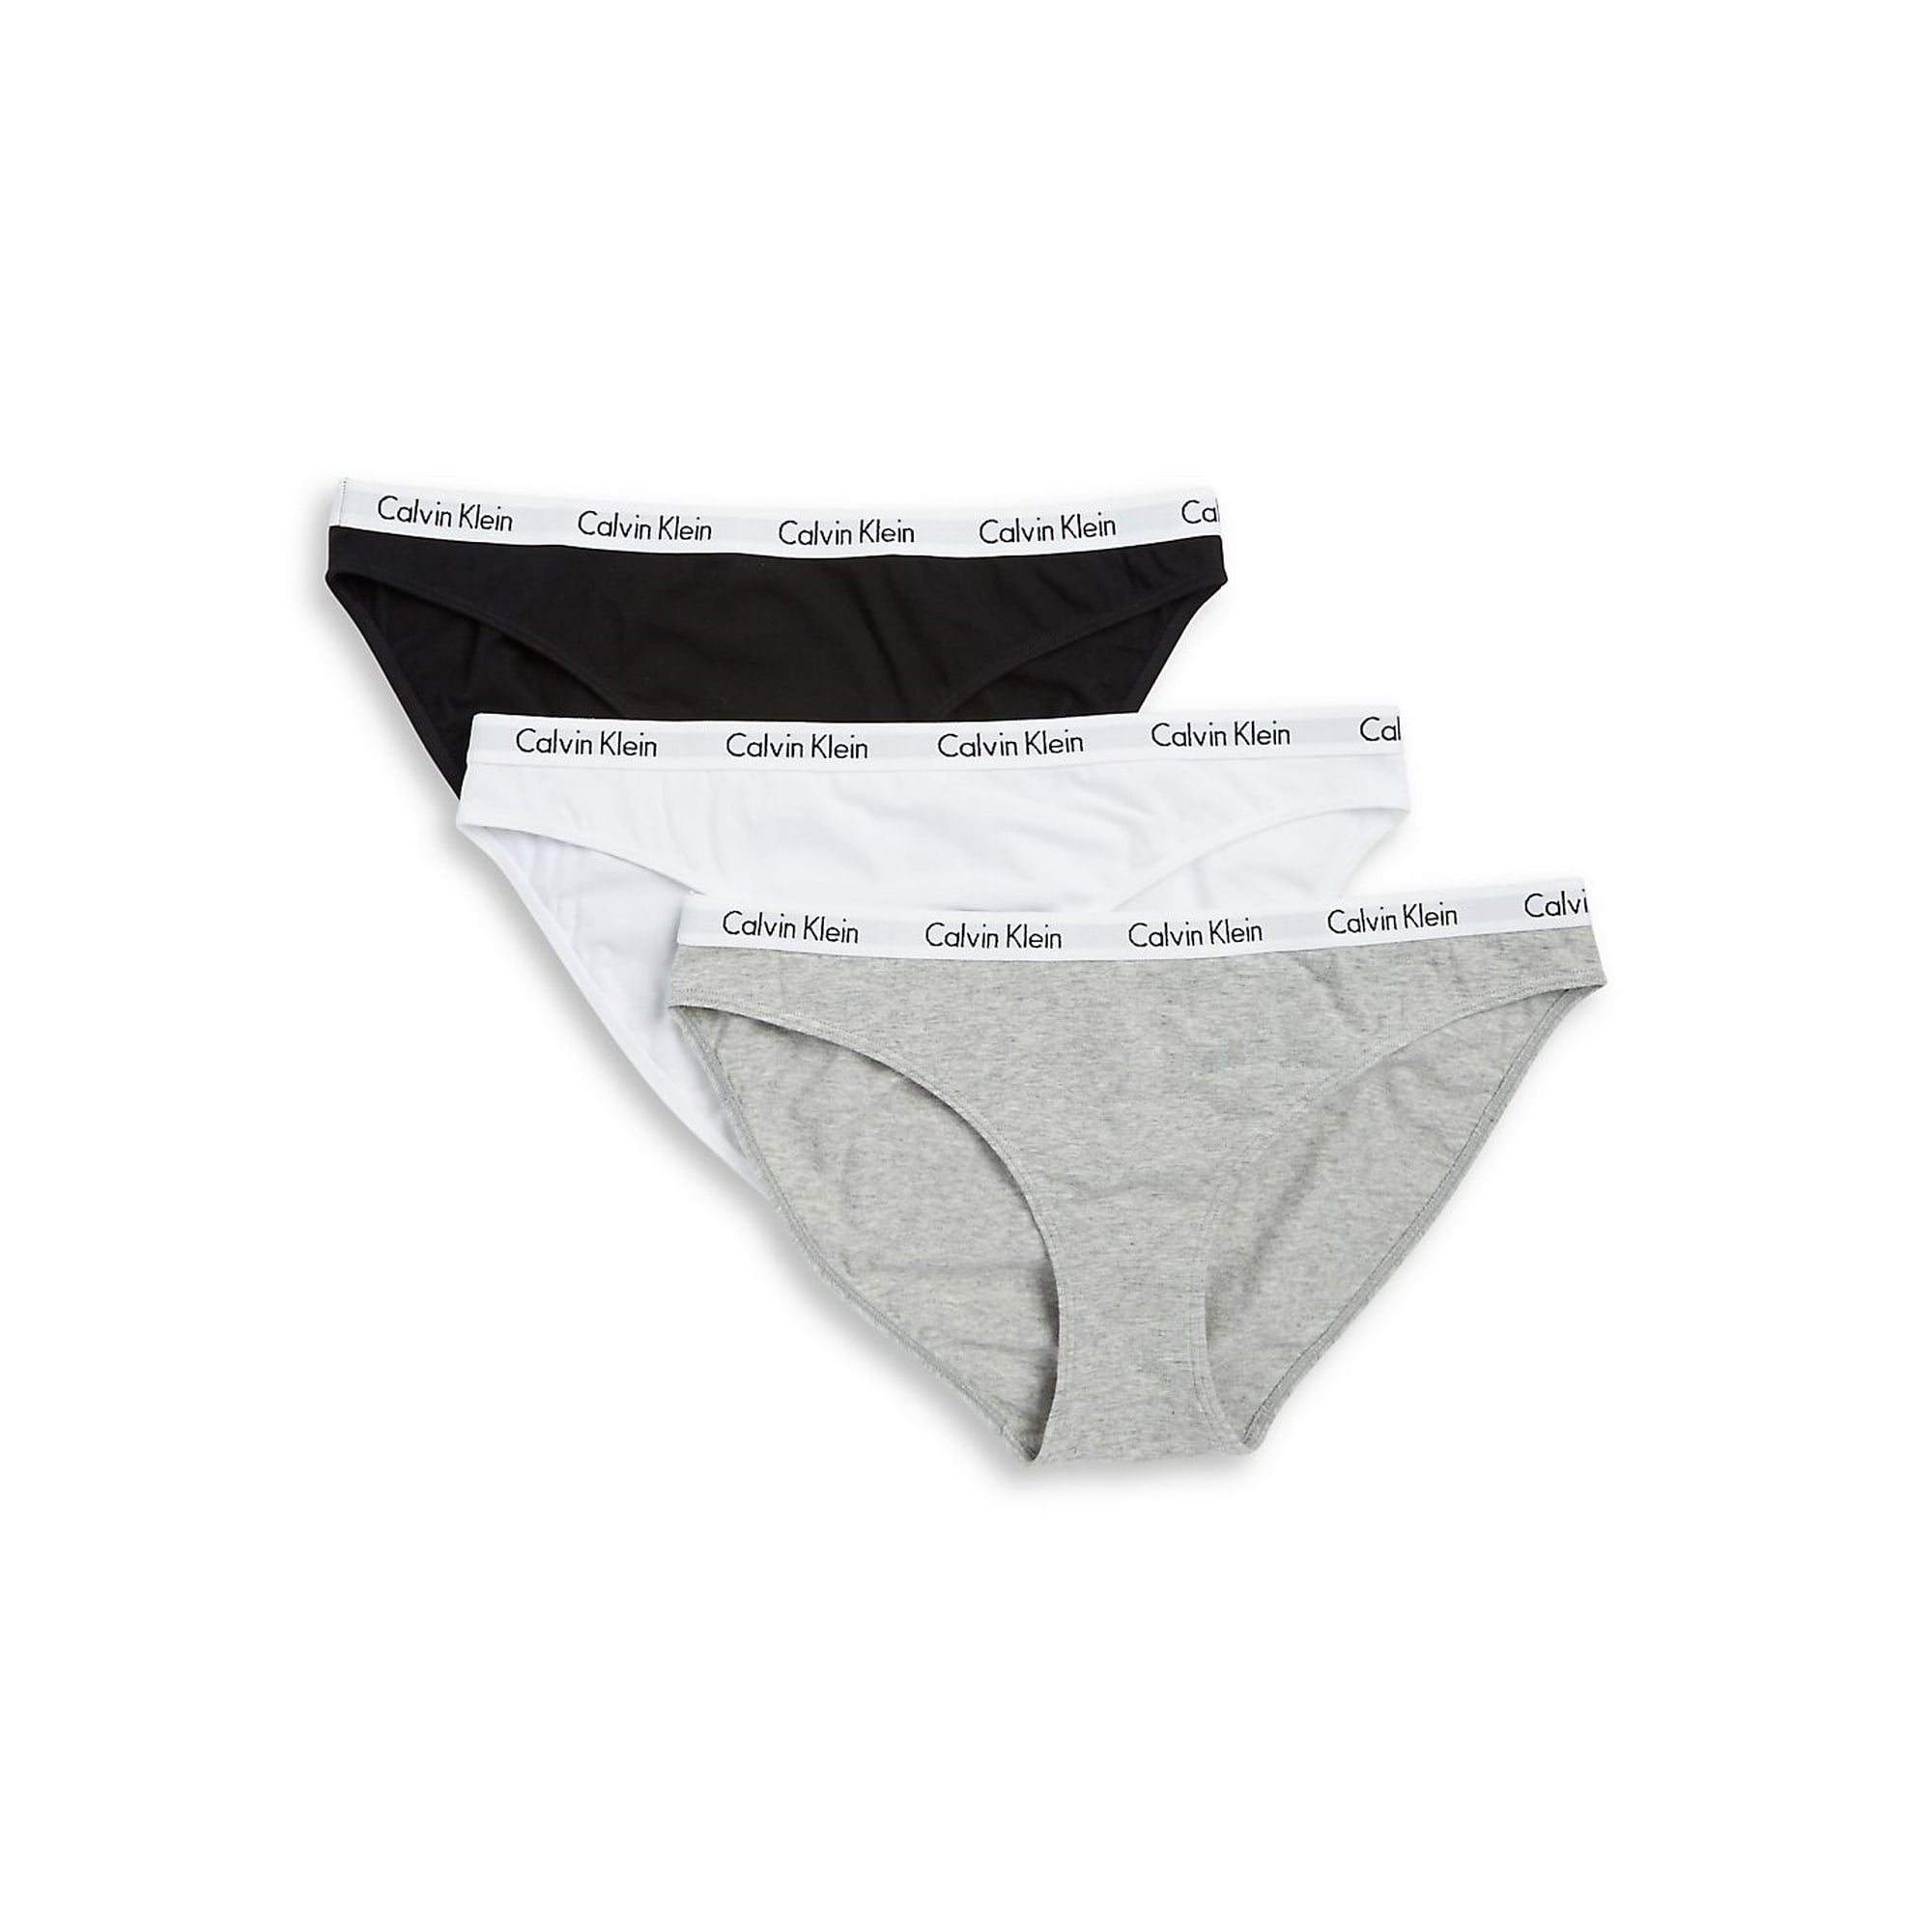 Calvin Klein Underwear Women's Carousel 3 Pack Panties, Multi, X-Small |  Walmart Canada